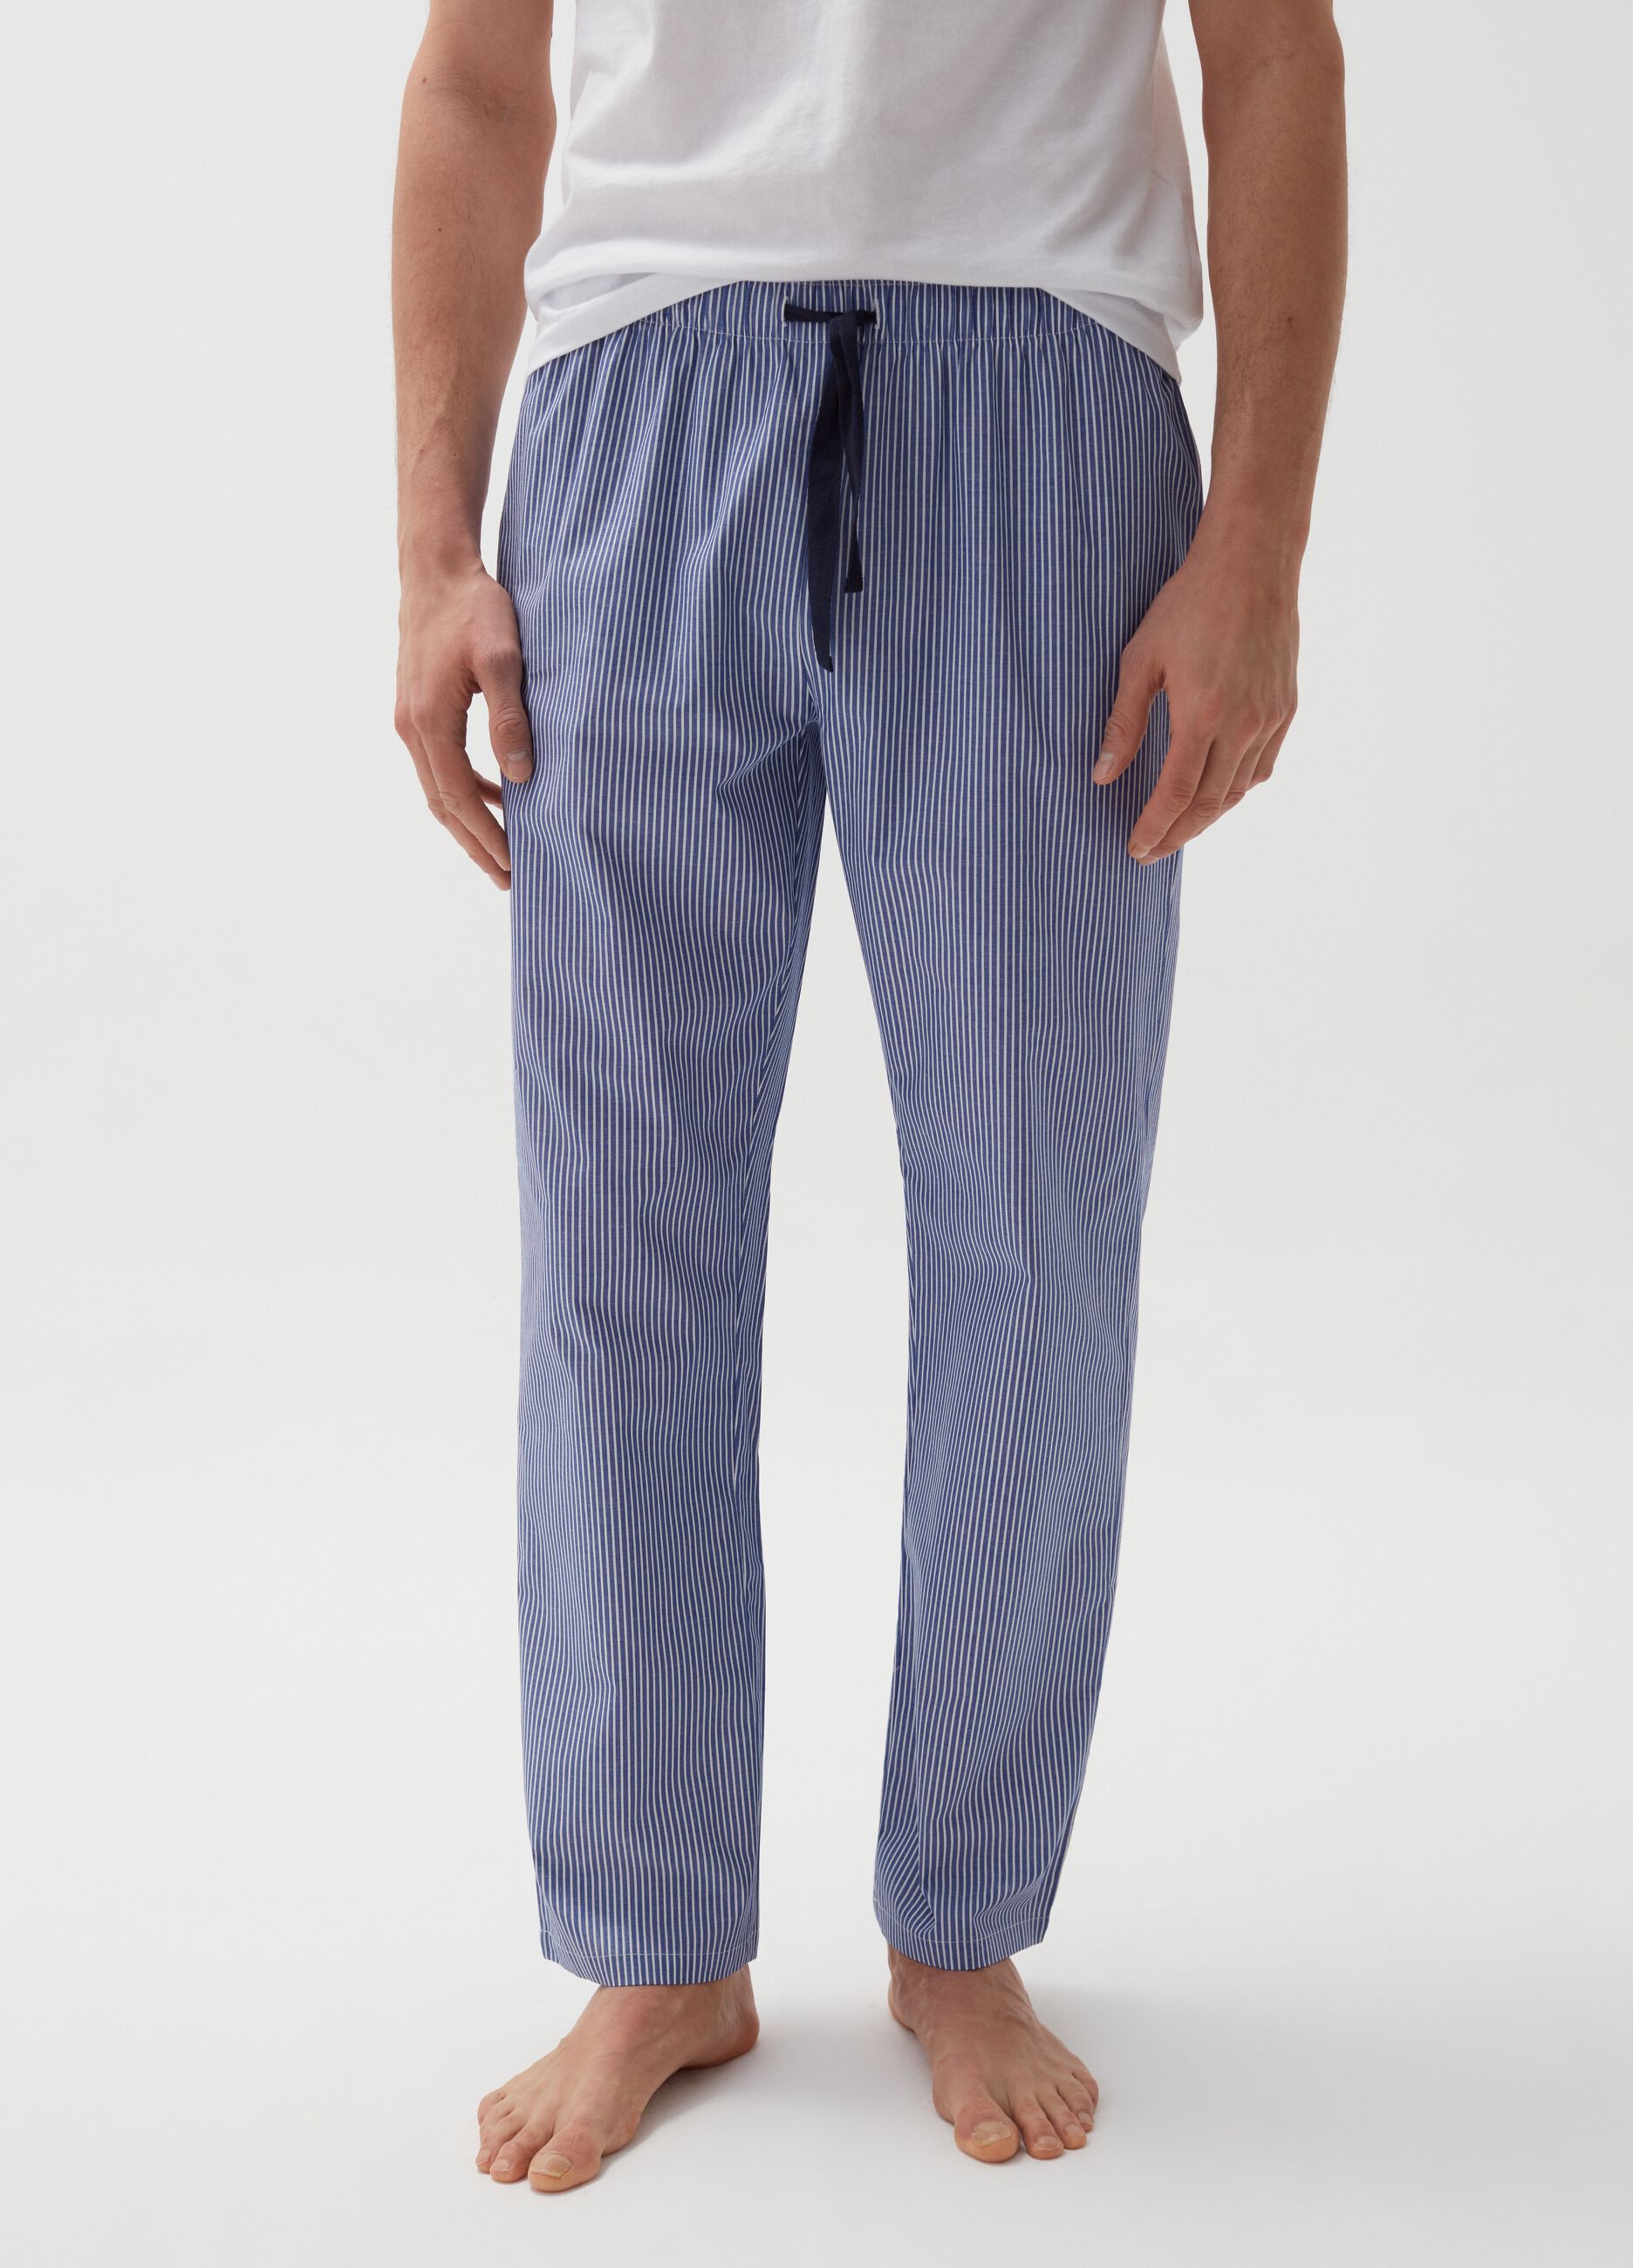 Pantalón pijama de algodón con cordón